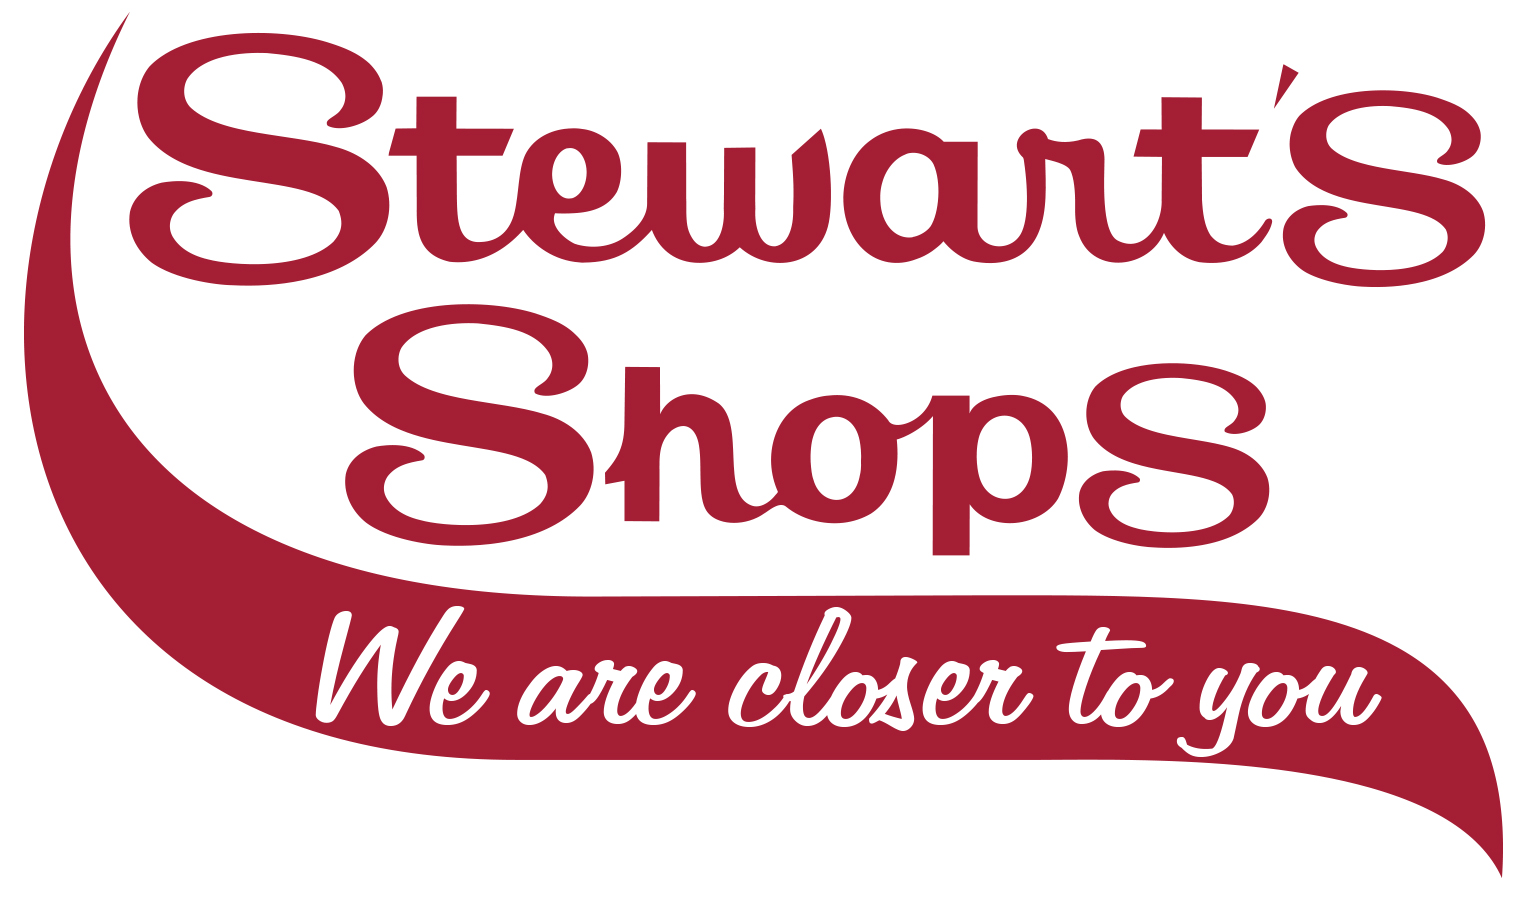 Stewarts Shops Wave Logo Closer to You COLOR